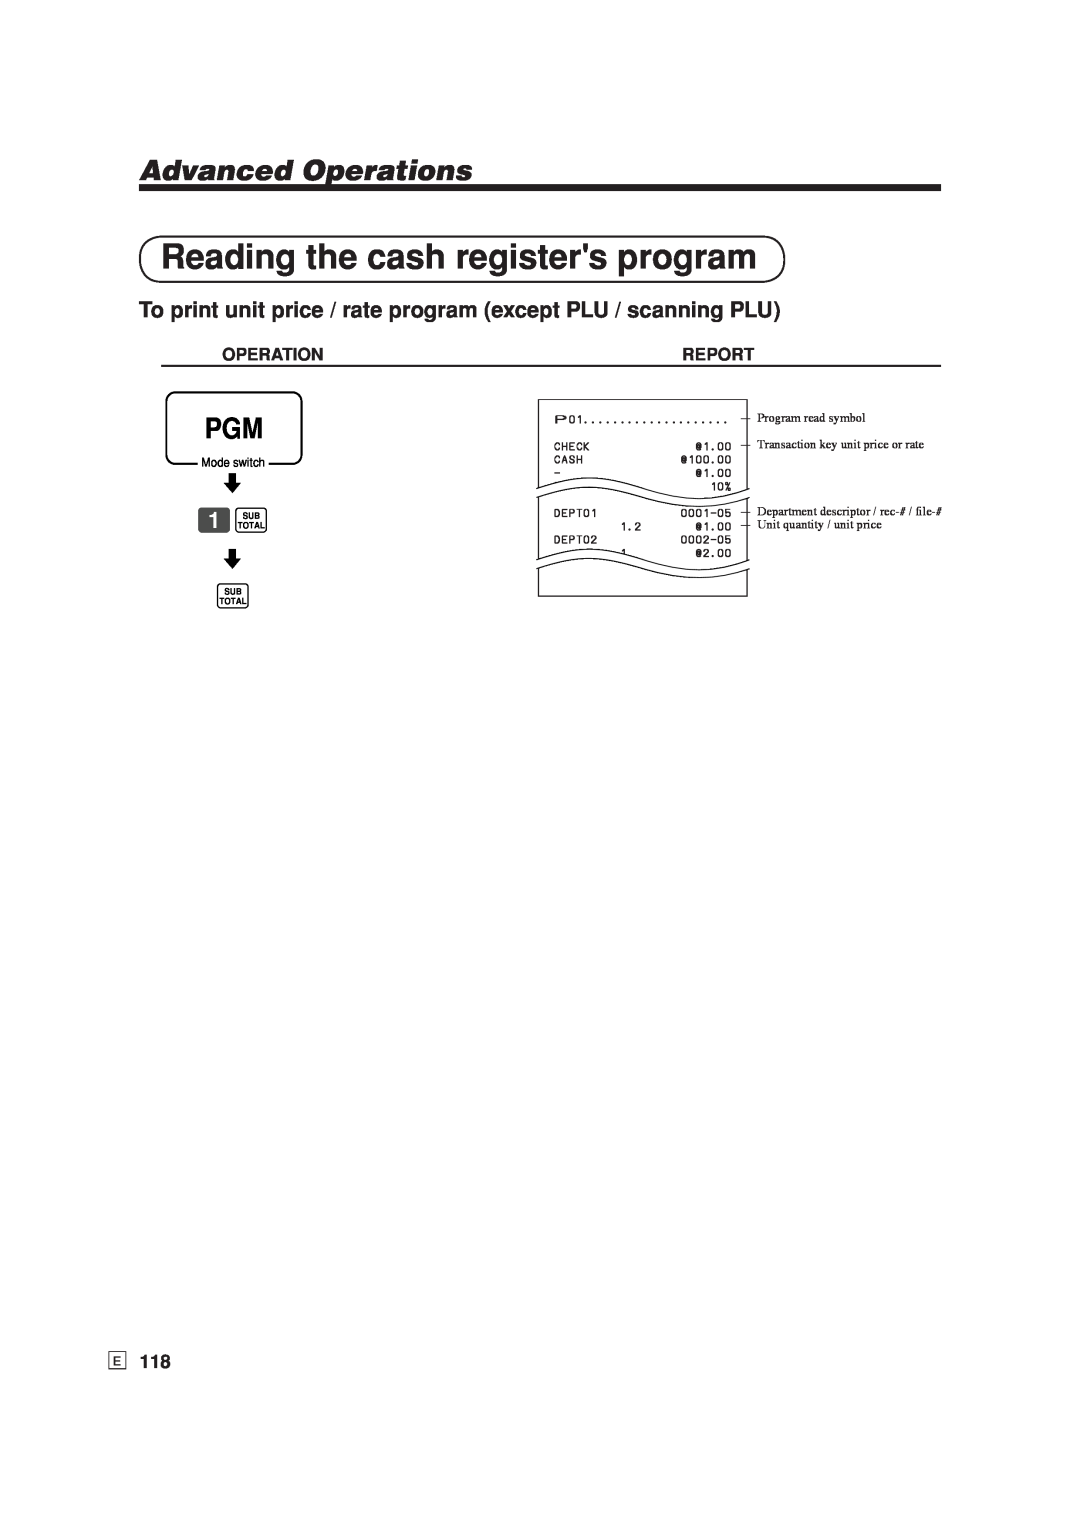 Casio SE-S6000, SE-C6000 Reading the cash registers program, To print unit price / rate program except PLU / scanning PLU 